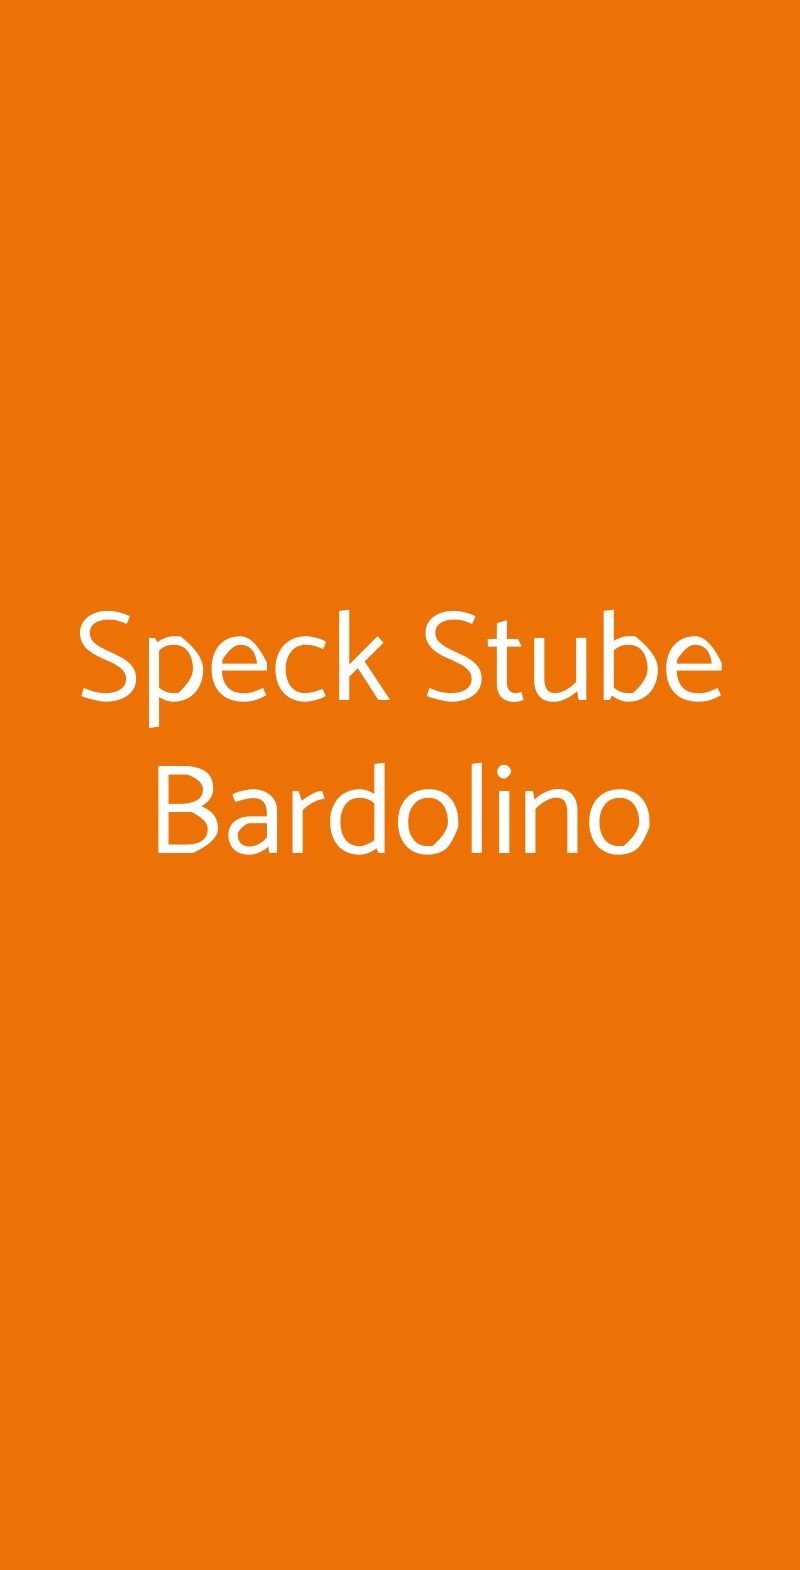 Speck Stube Bardolino Bardolino menù 1 pagina